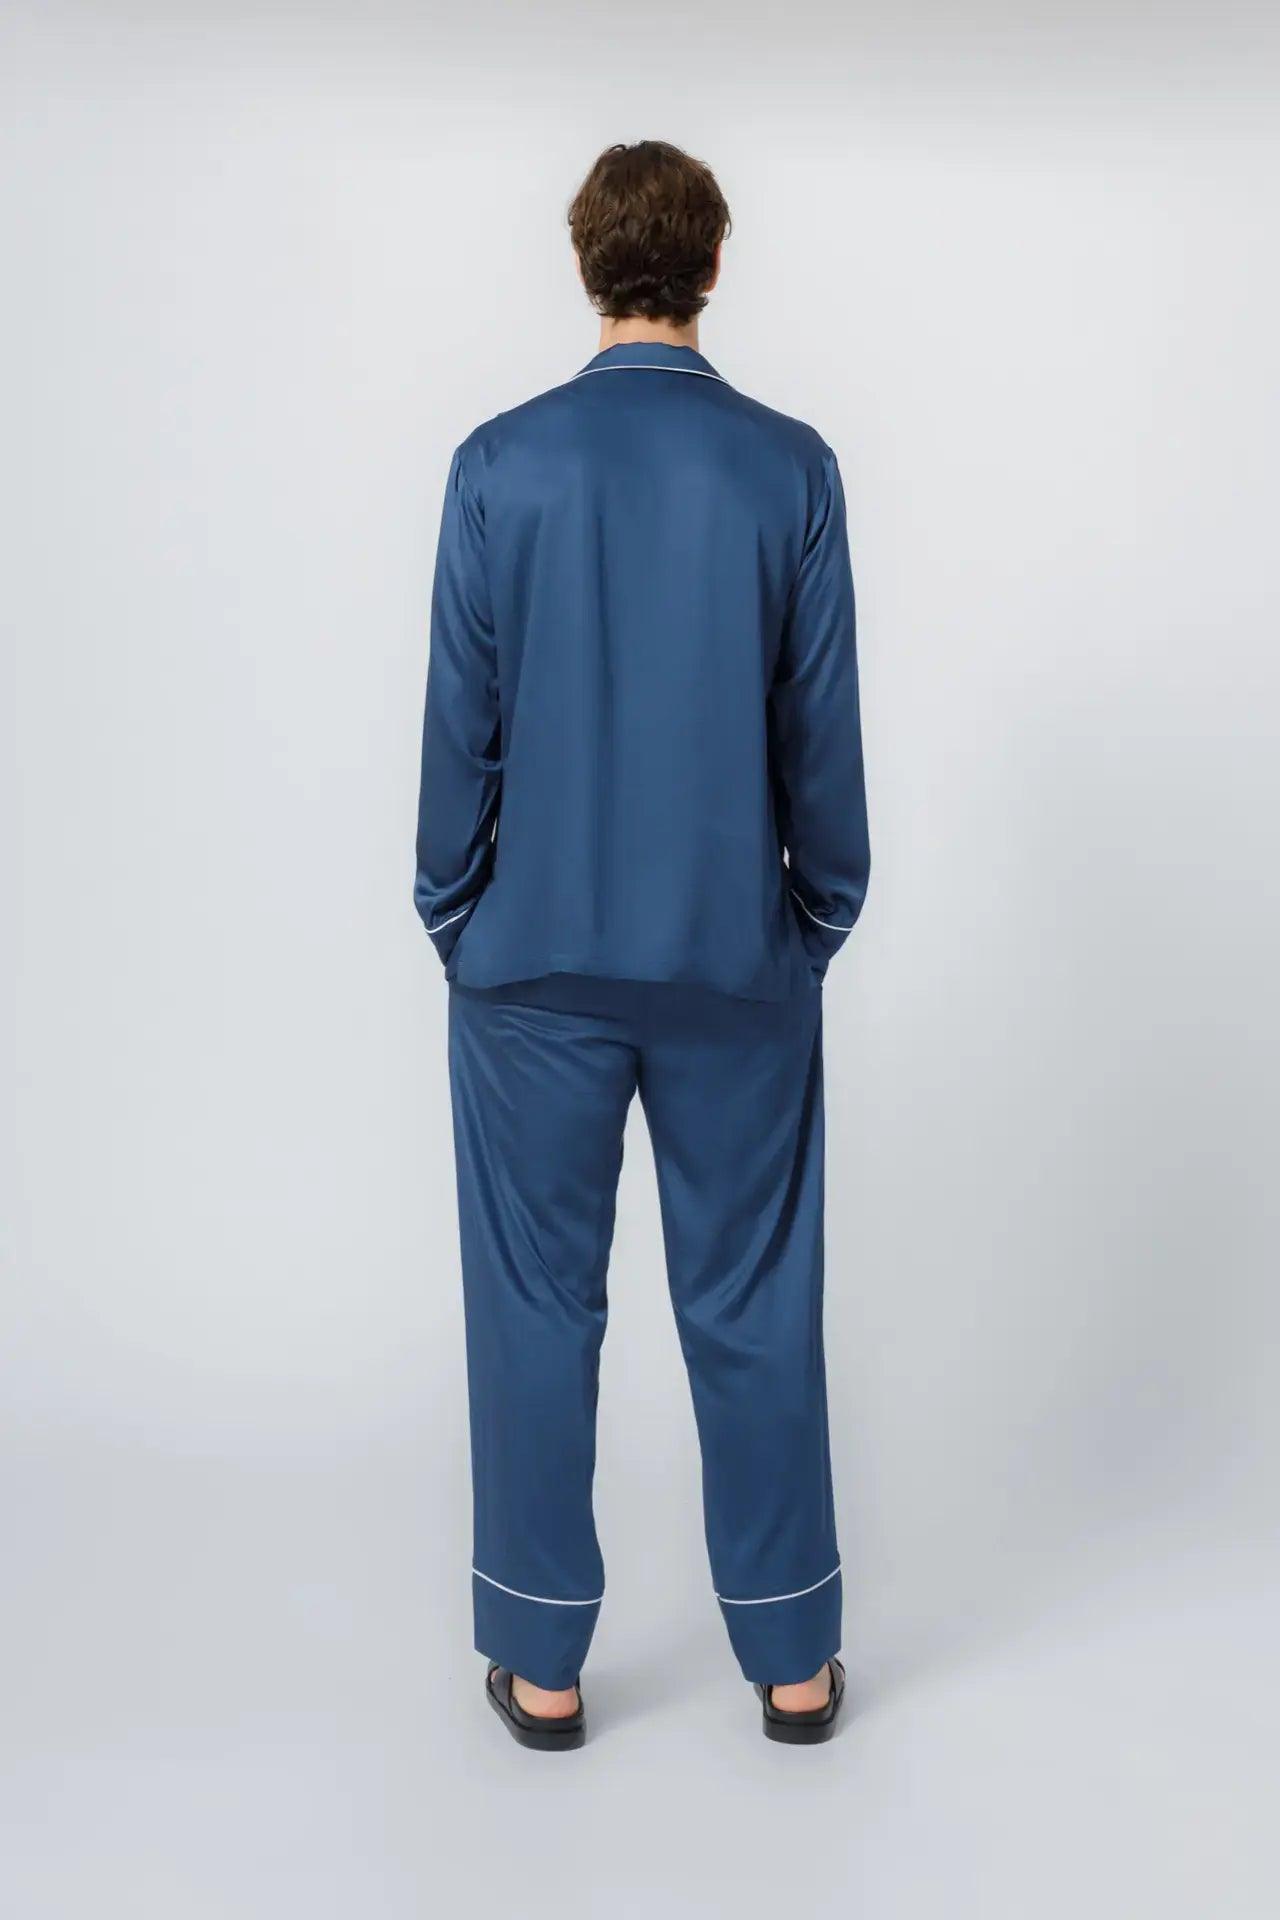 Men's Comfort Bamboo Pajama Set - NOT LABELED